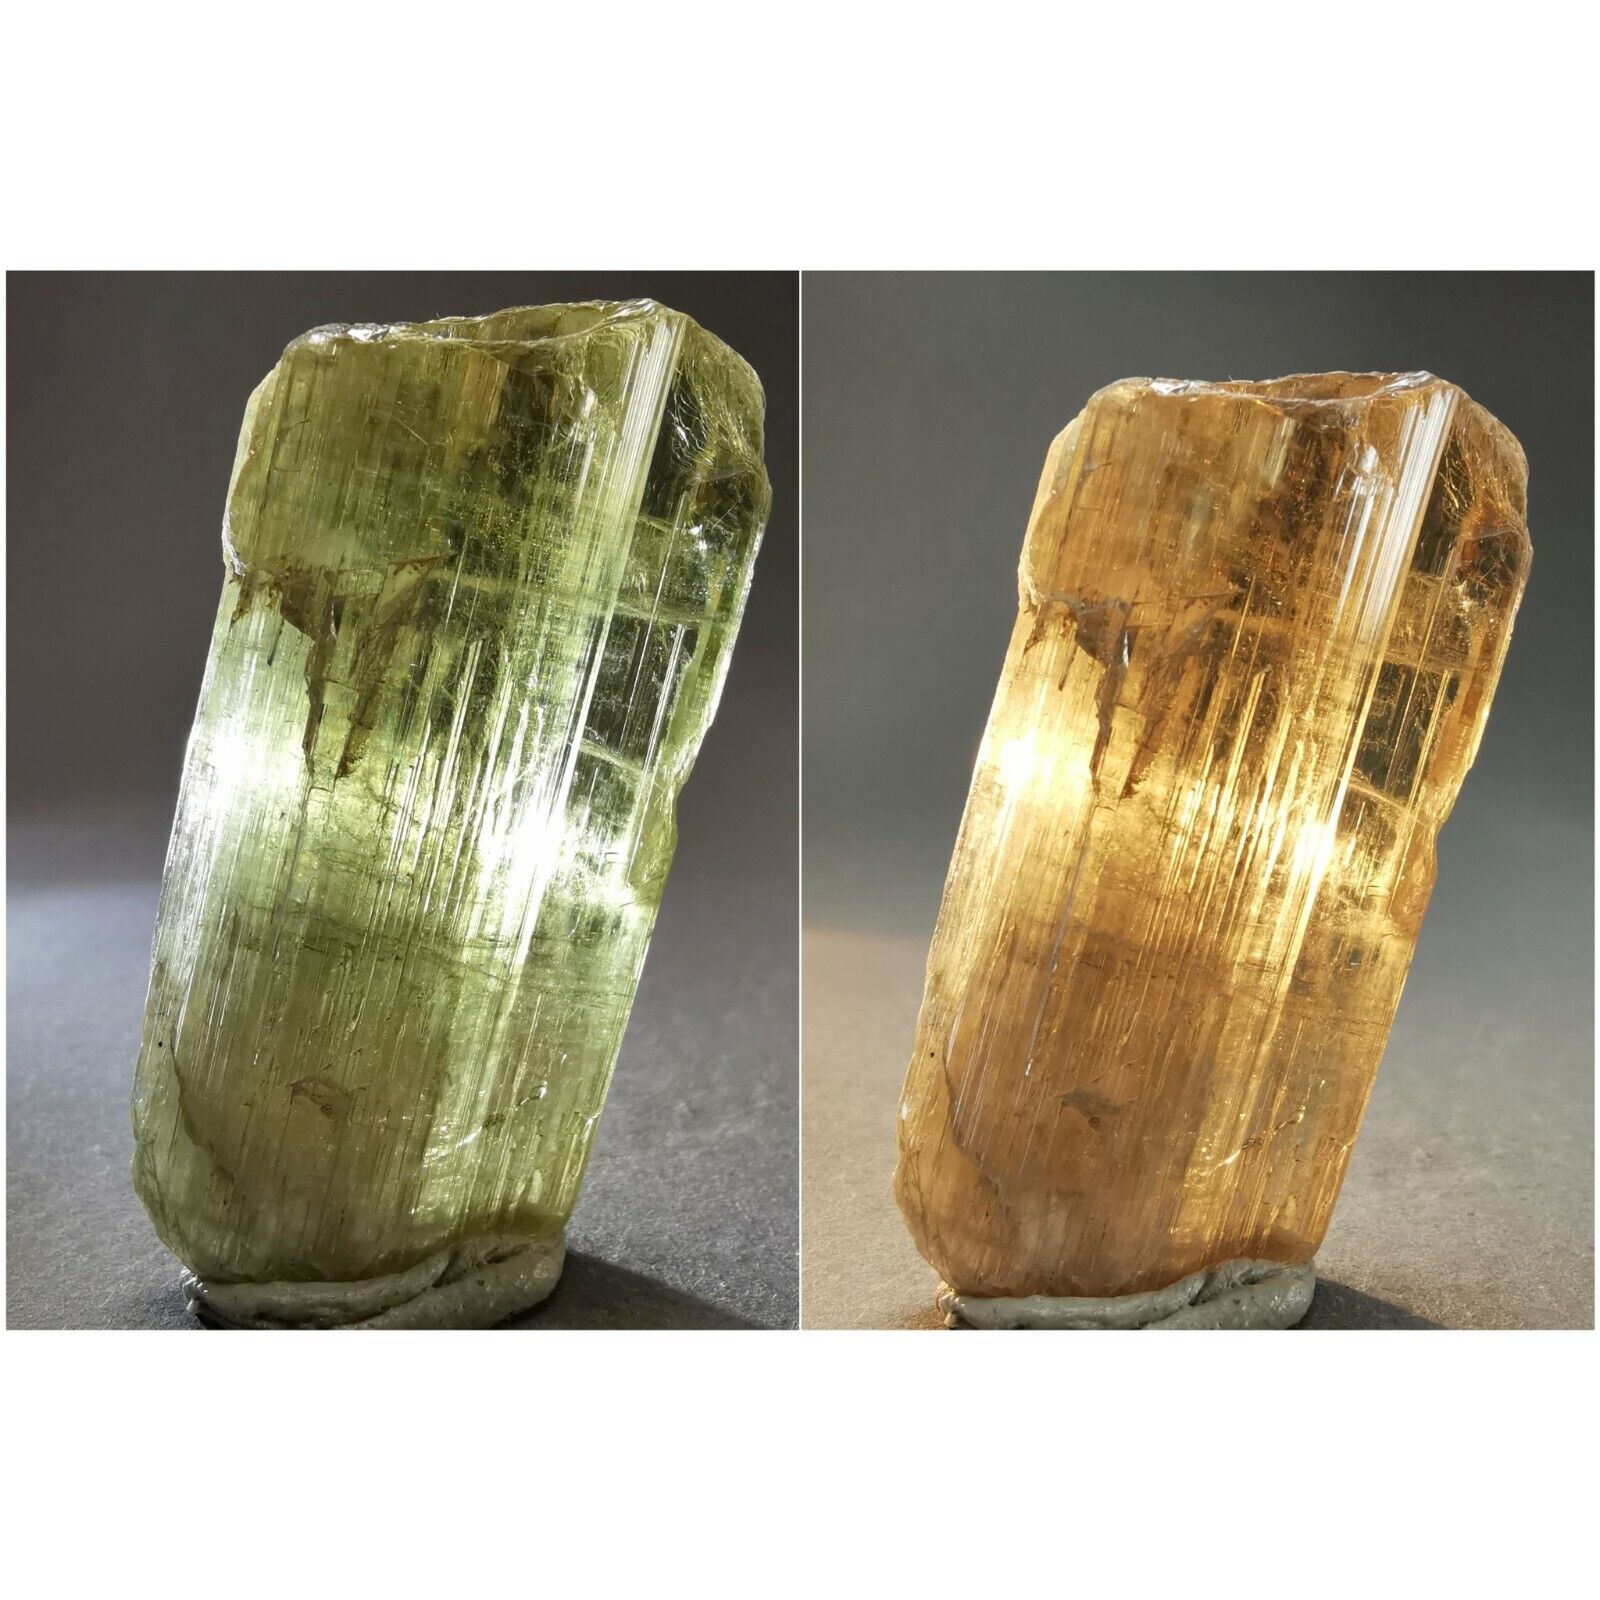 137ct GEMMY Color Change Diaspore / Turkey / Rough Crystal Gemstone Specimen